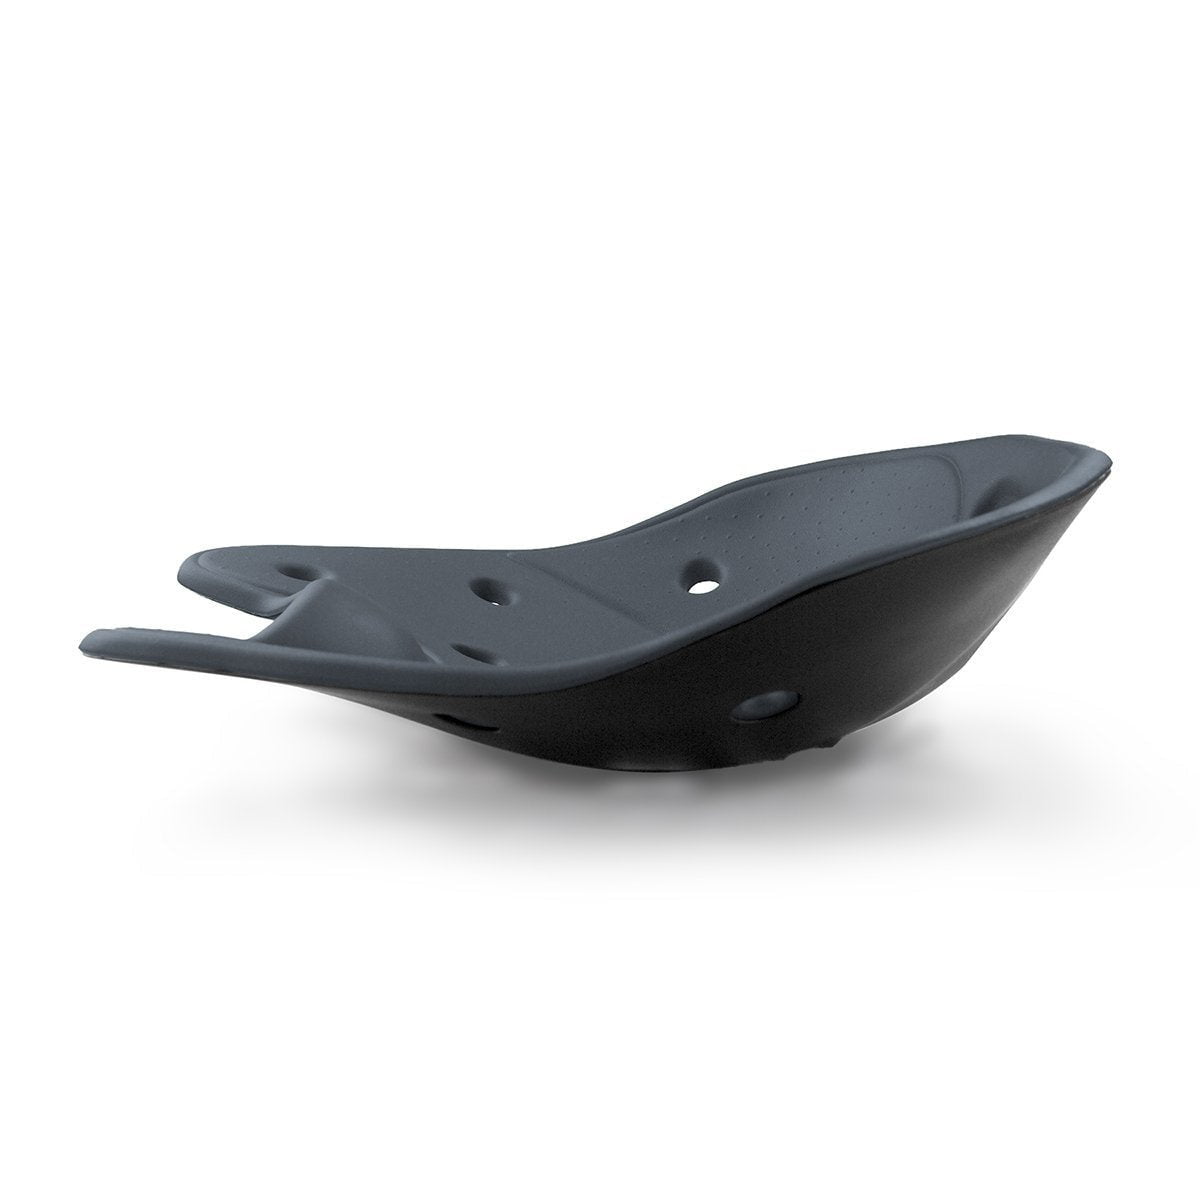 BackJoy SitSmart Core Traction Portable Posture Seat Black Curved Ergonomic